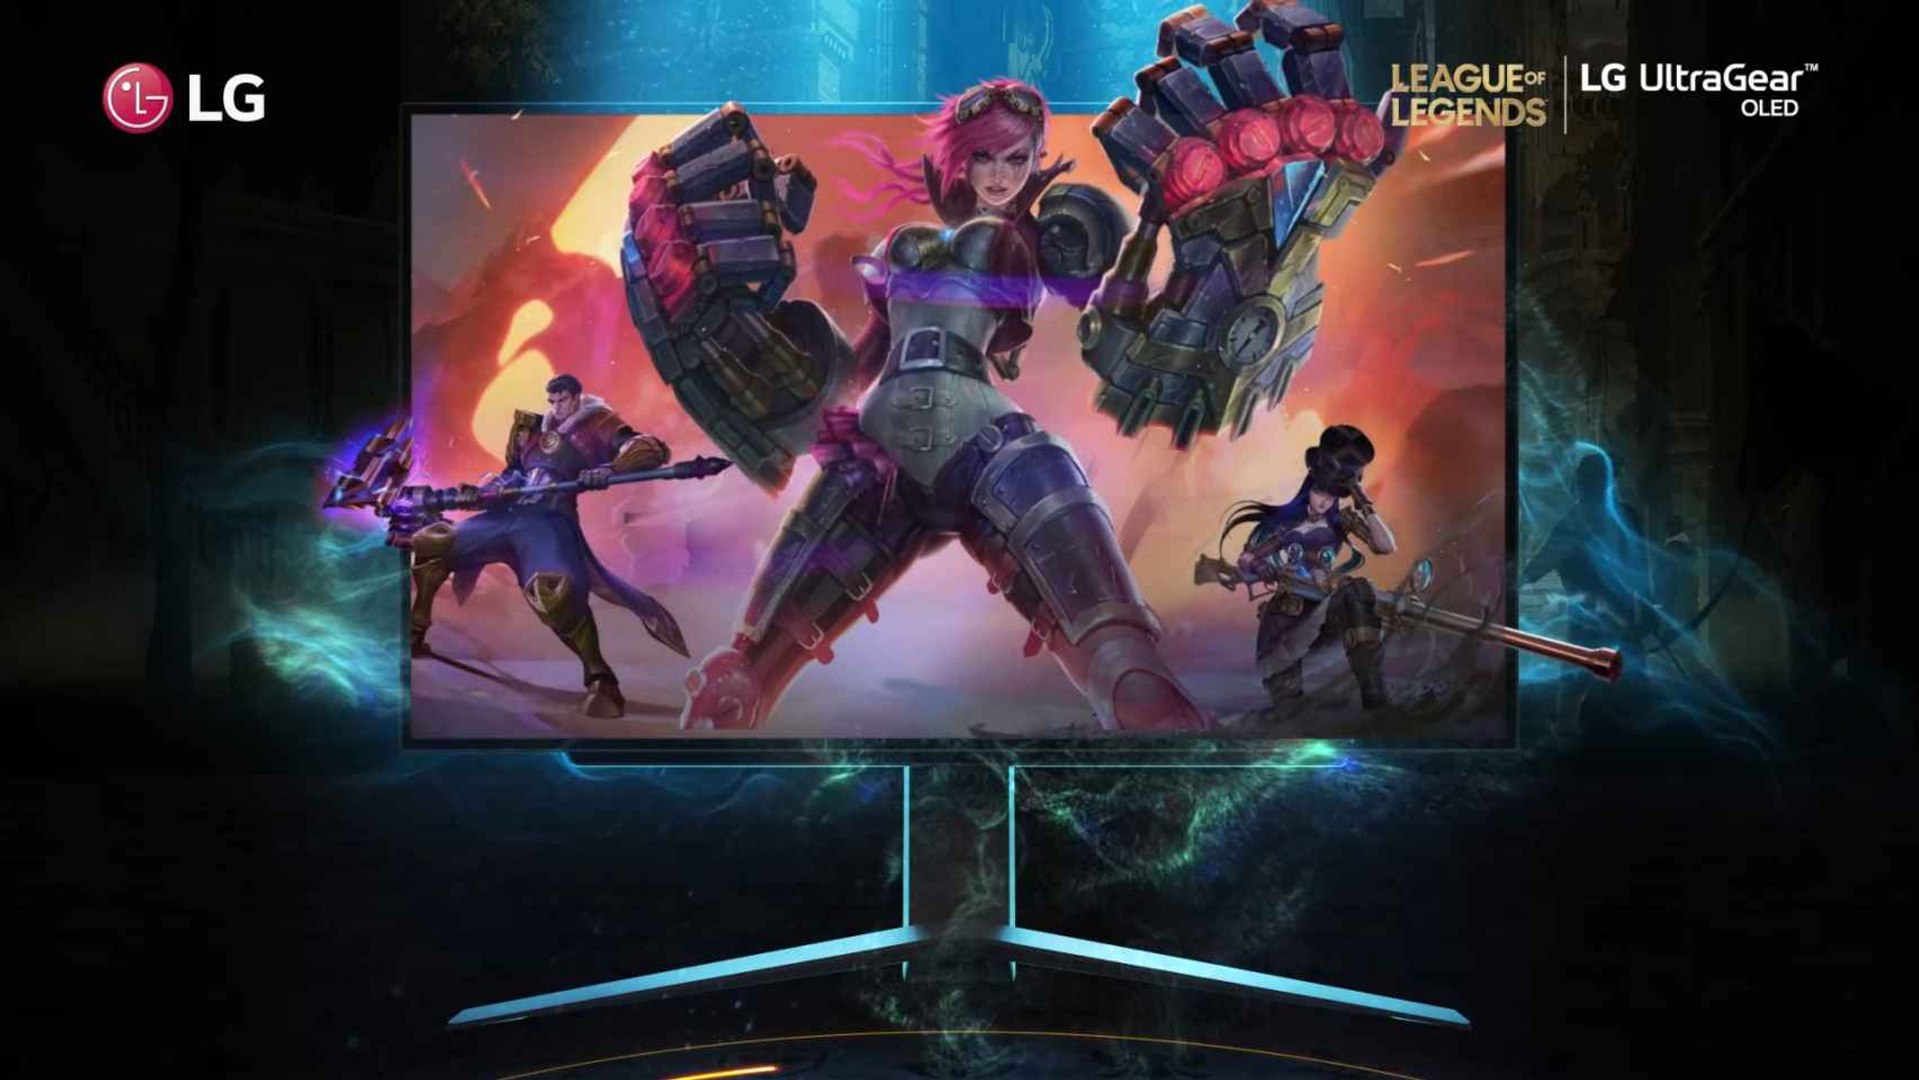 LG UltraGear OLED edición limitada League of Legends - Vídeo Dailymotion